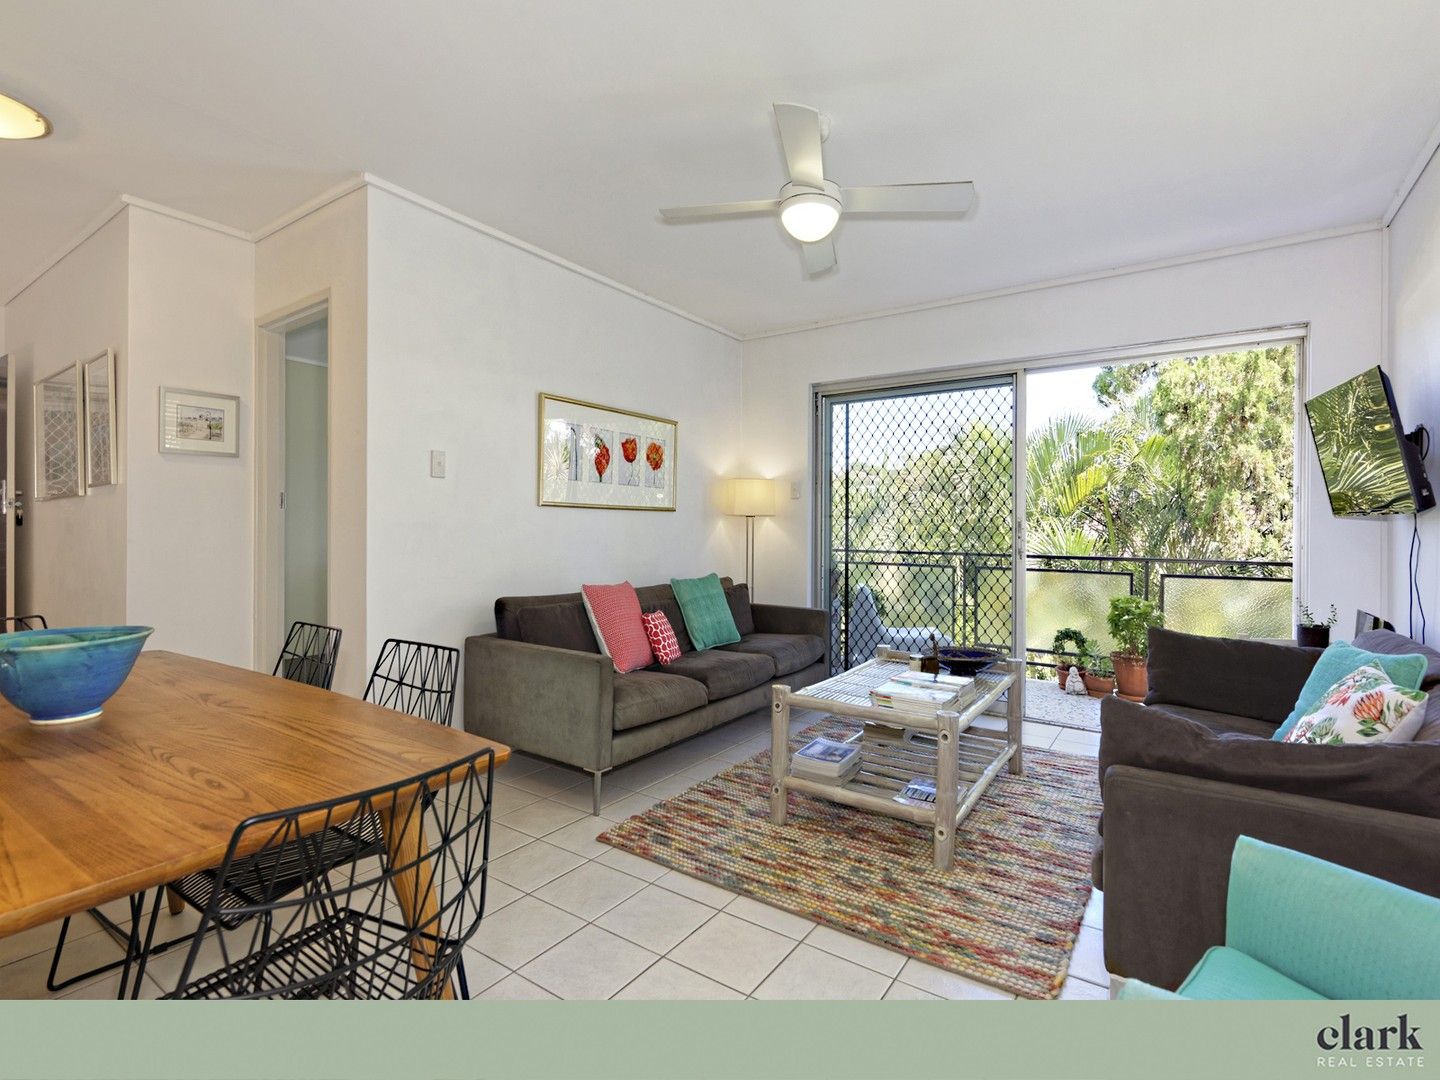 2 bedrooms Apartment / Unit / Flat in 8/17 Moynihan Street ASCOT QLD, 4007